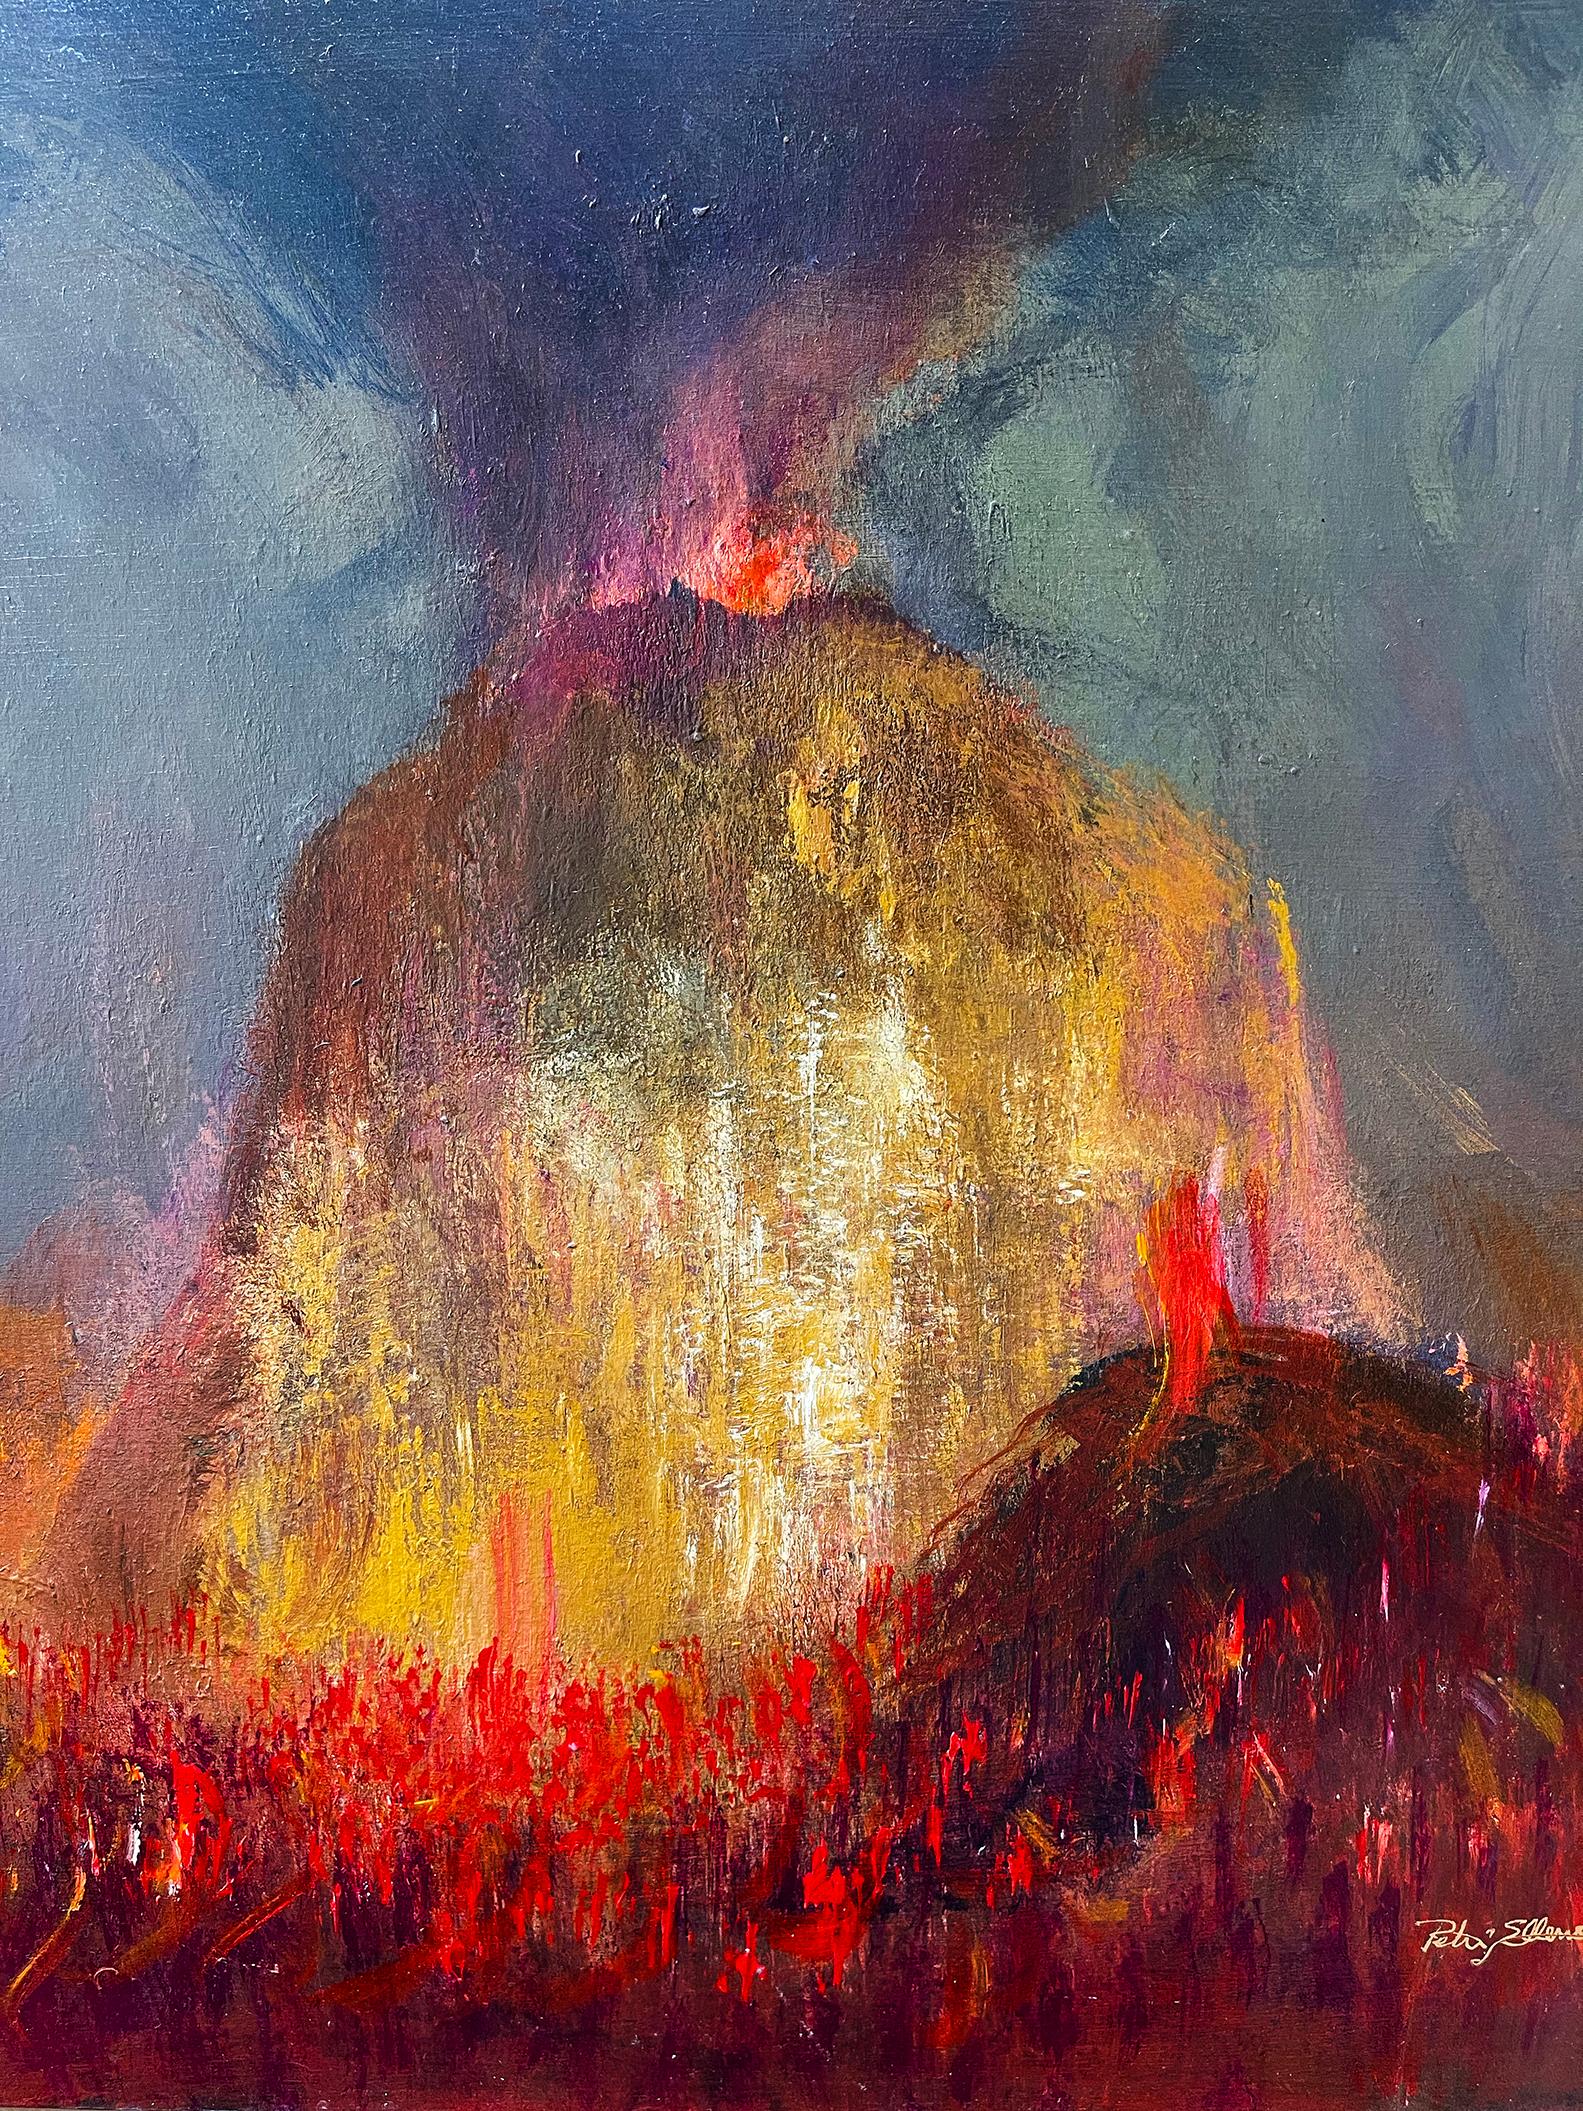 Volcano-Eruption – Explosive Fire Lava-Flow from Hell im Angebot 1